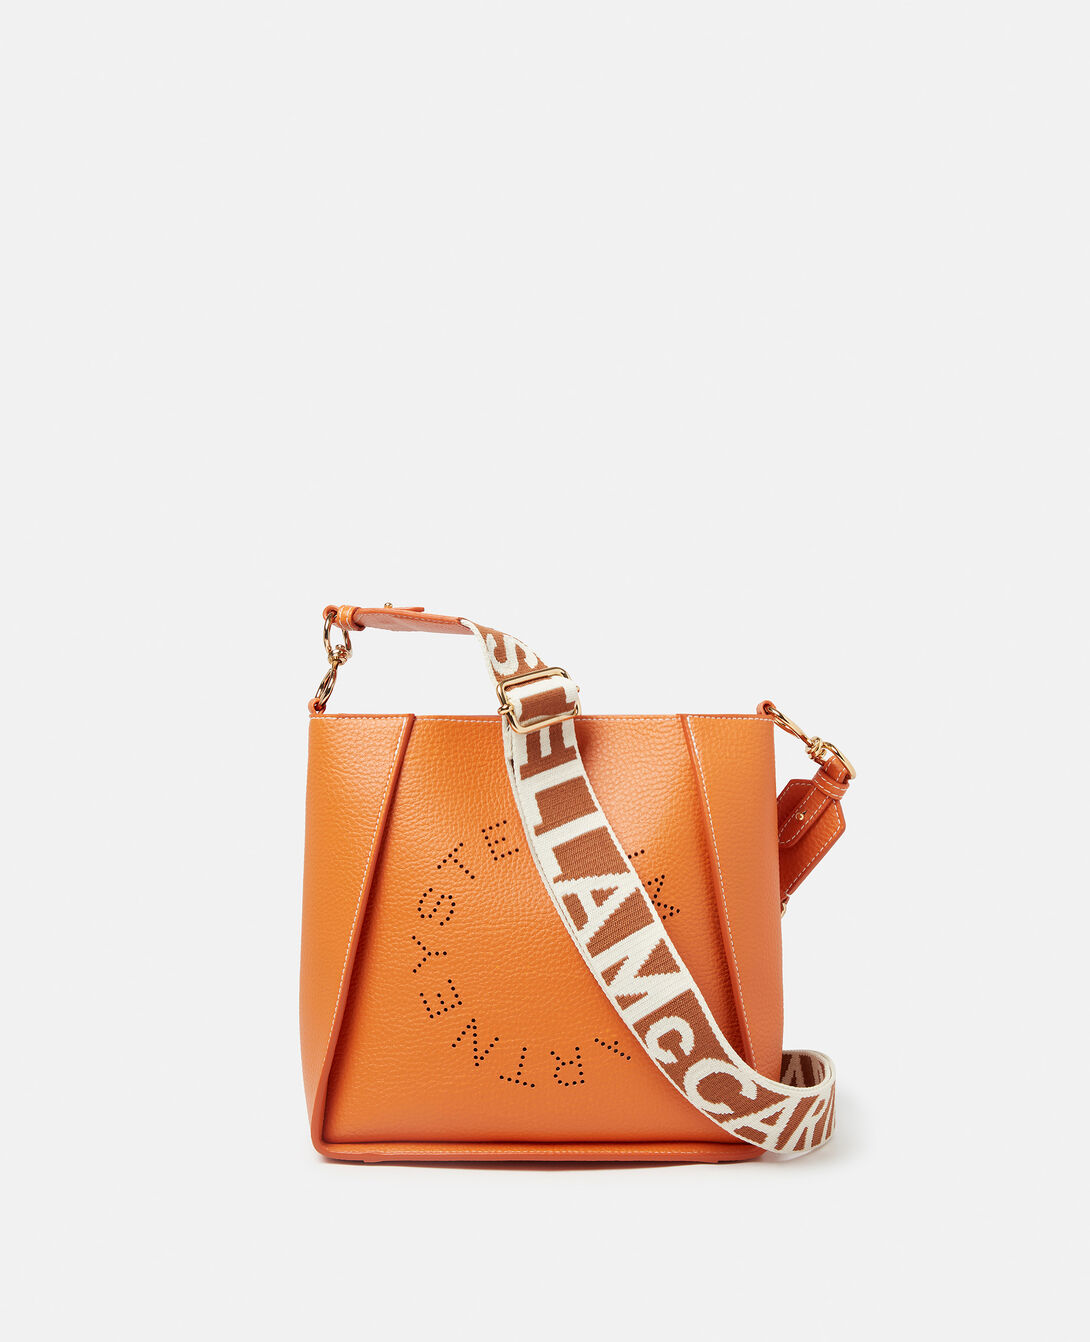 Women Orange Logo Grainy Alter Mat Shoulder Bag